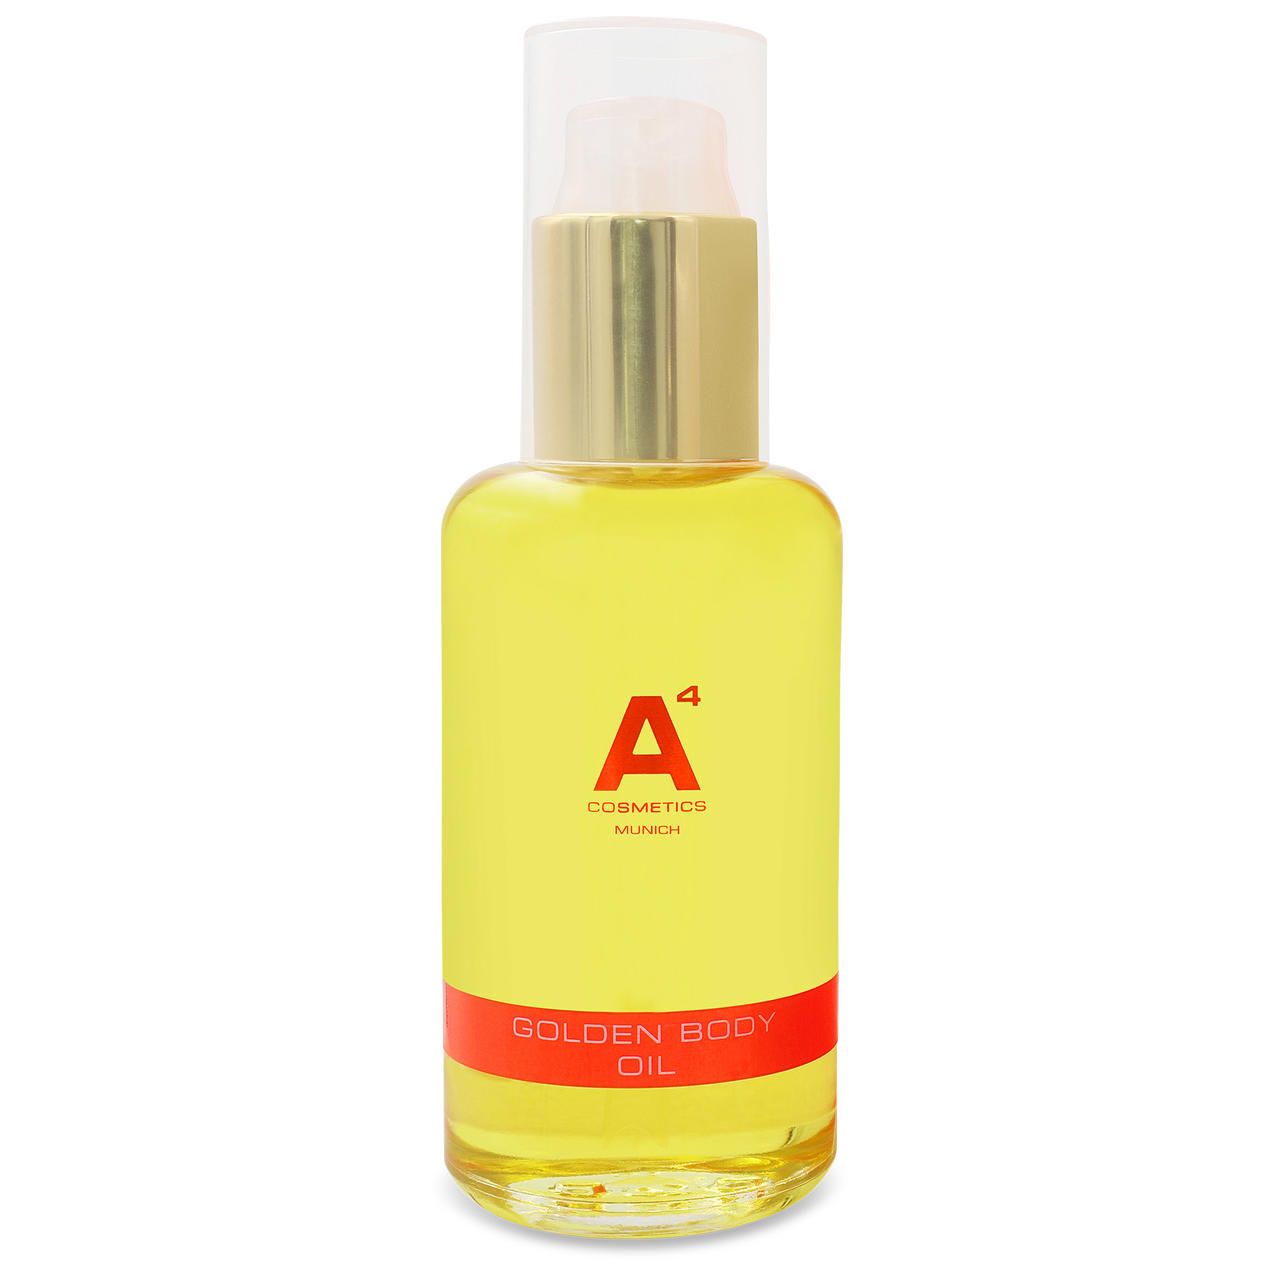 A4 Cosmetics, Golden Body Oil